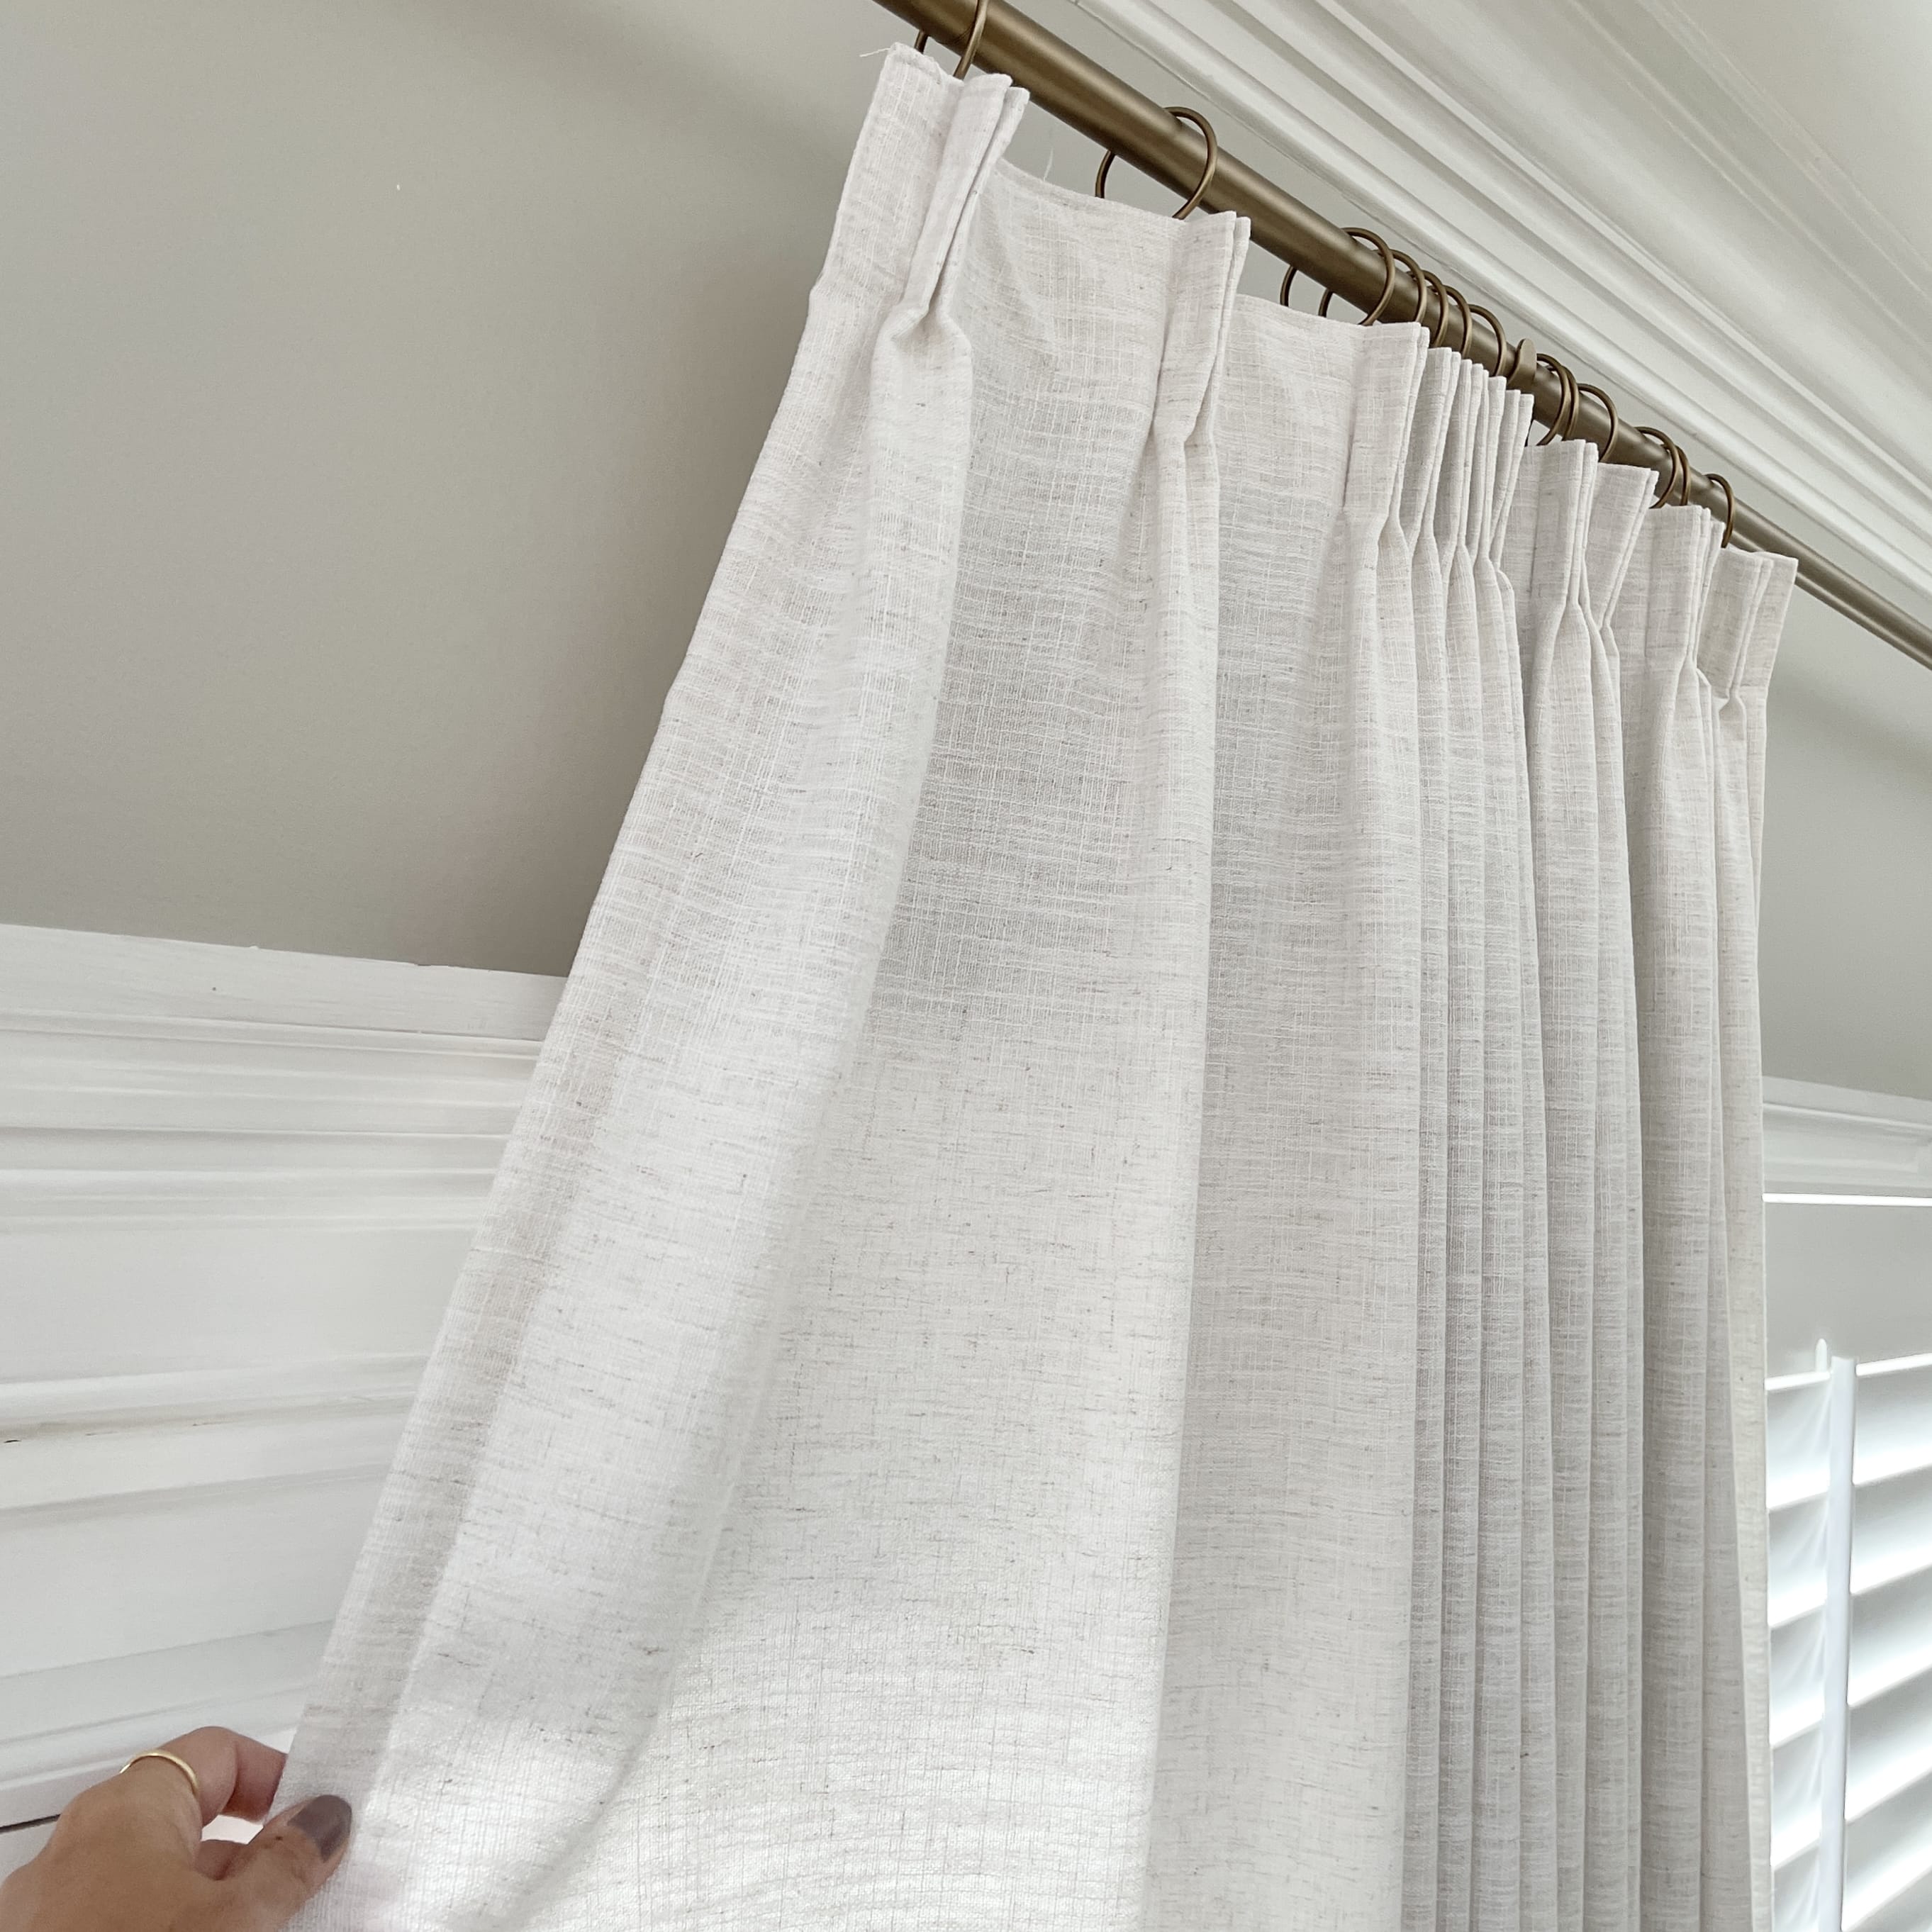 Basement Window Curtains: Tips & Ideas